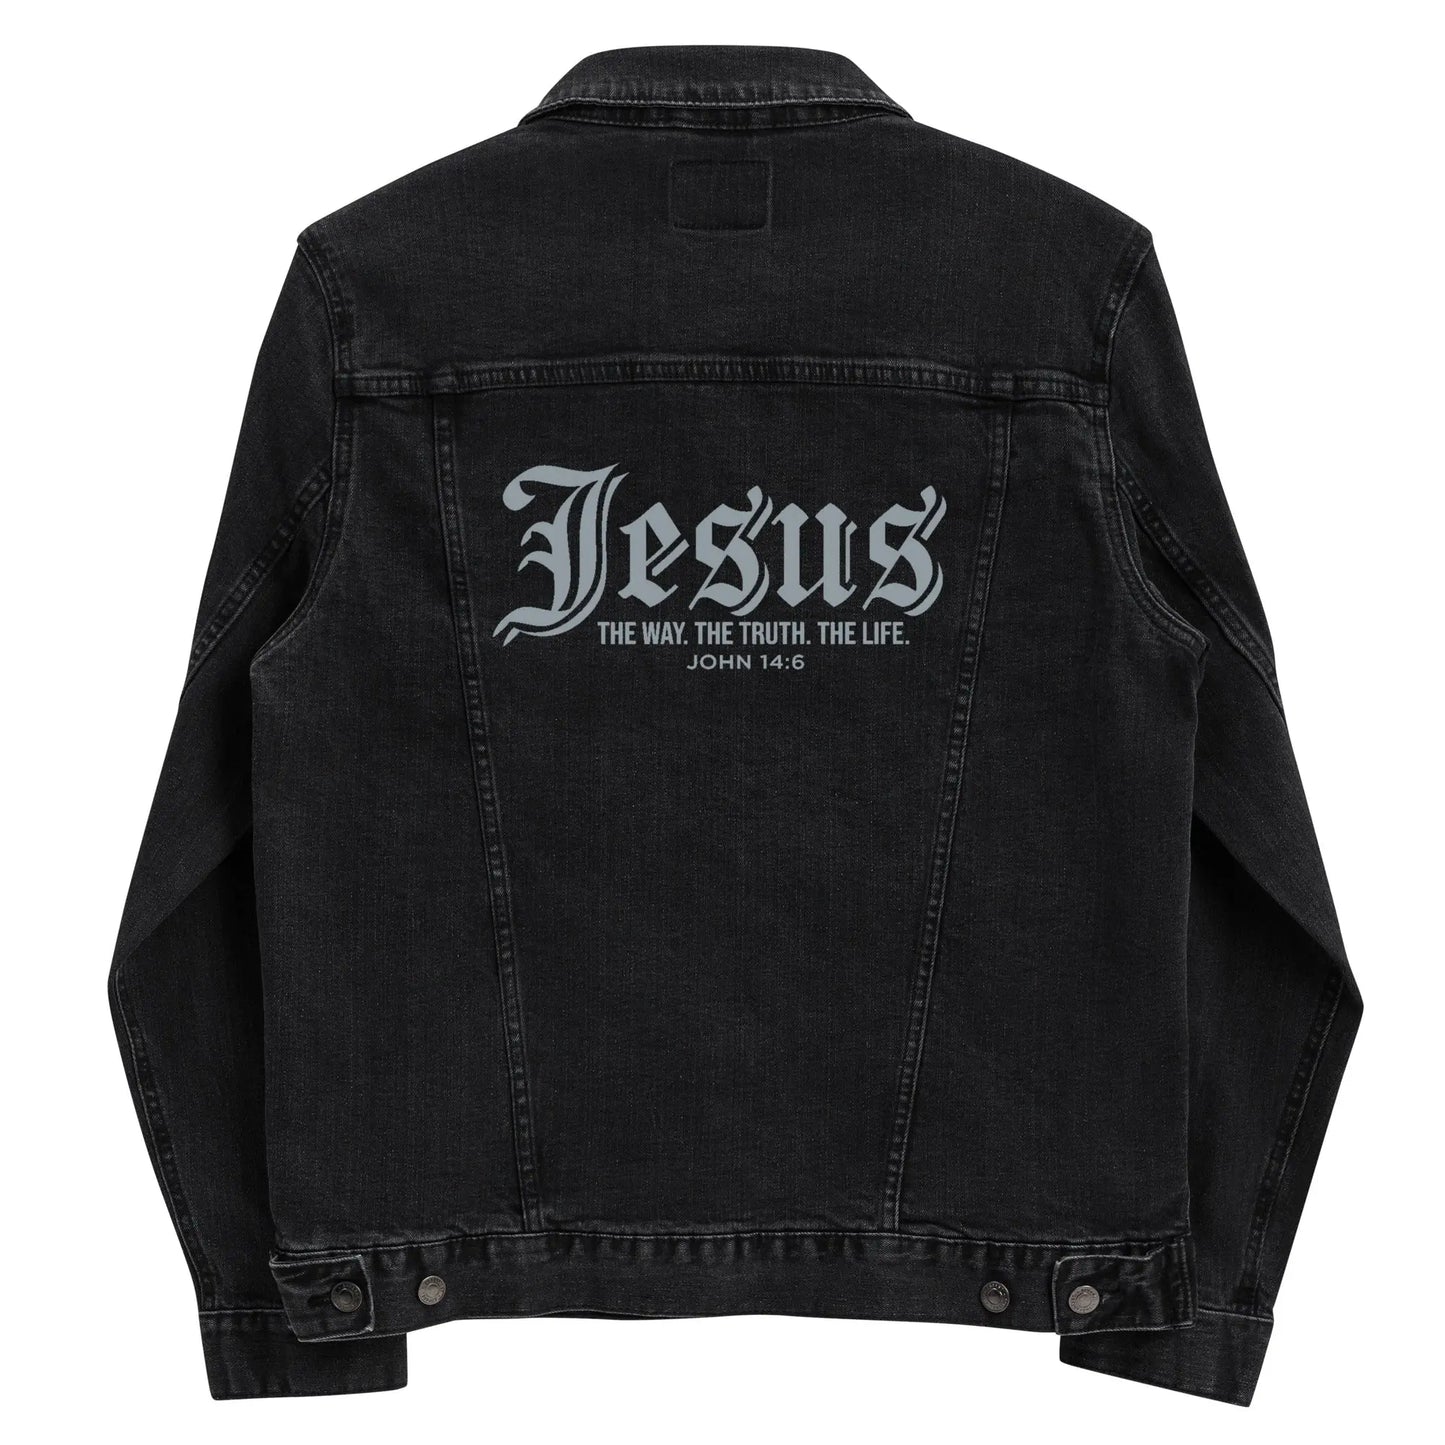 Jesus The Way Truth Life denim jacket Amazing Faith Designs